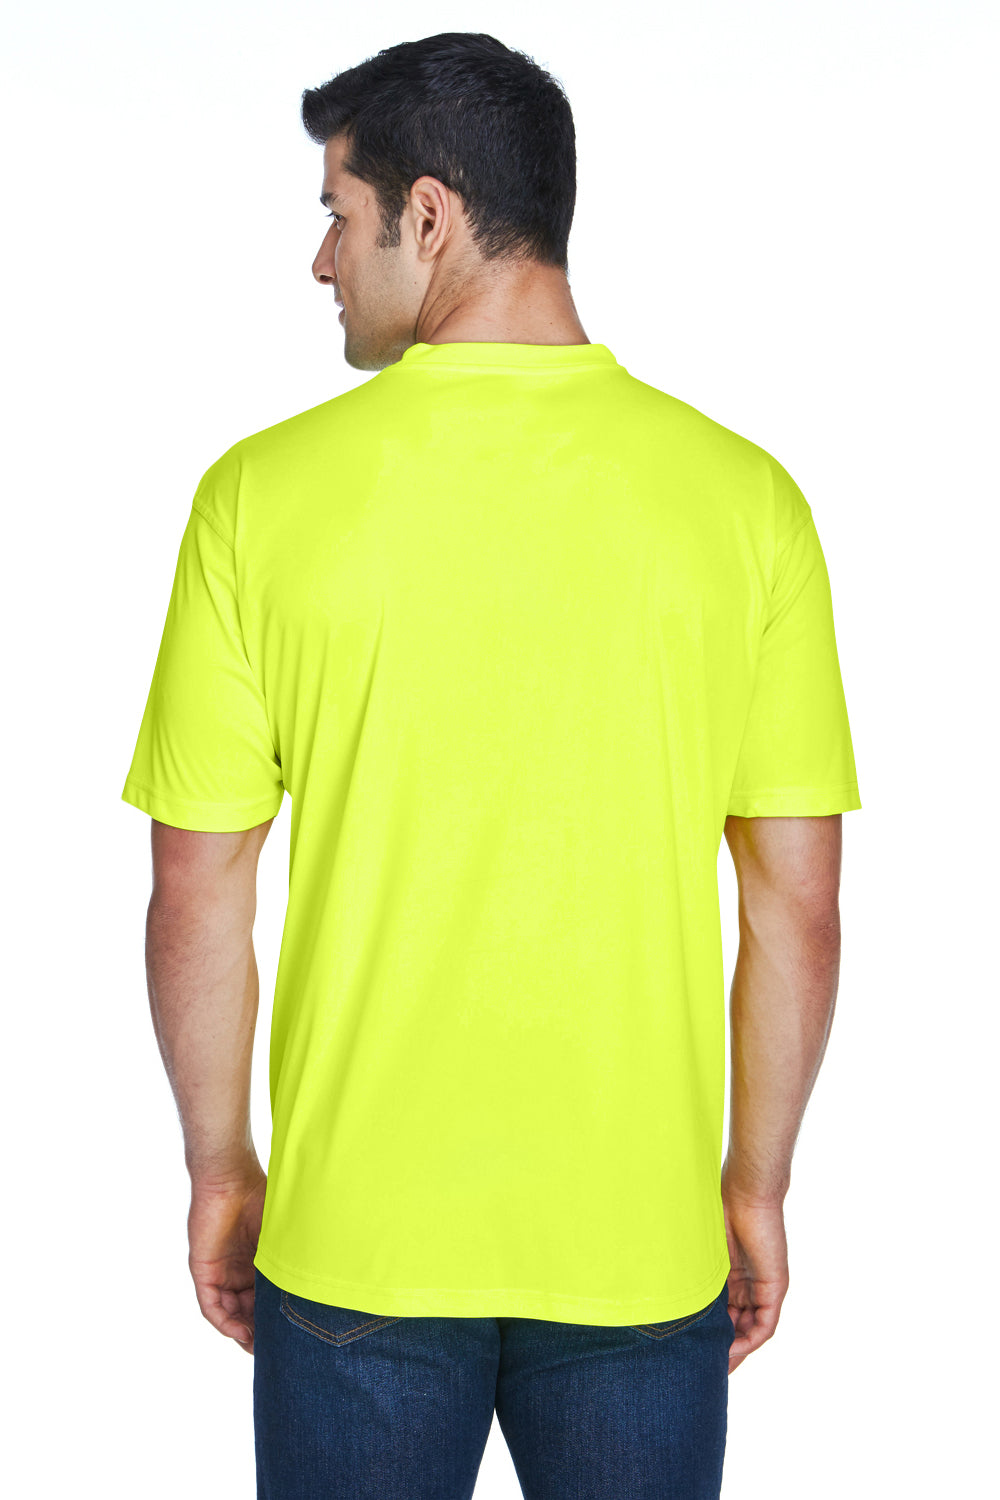 UltraClub 8420 Mens Cool & Dry Performance Moisture Wicking Short Sleeve Crewneck T-Shirt Bright Yellow Back